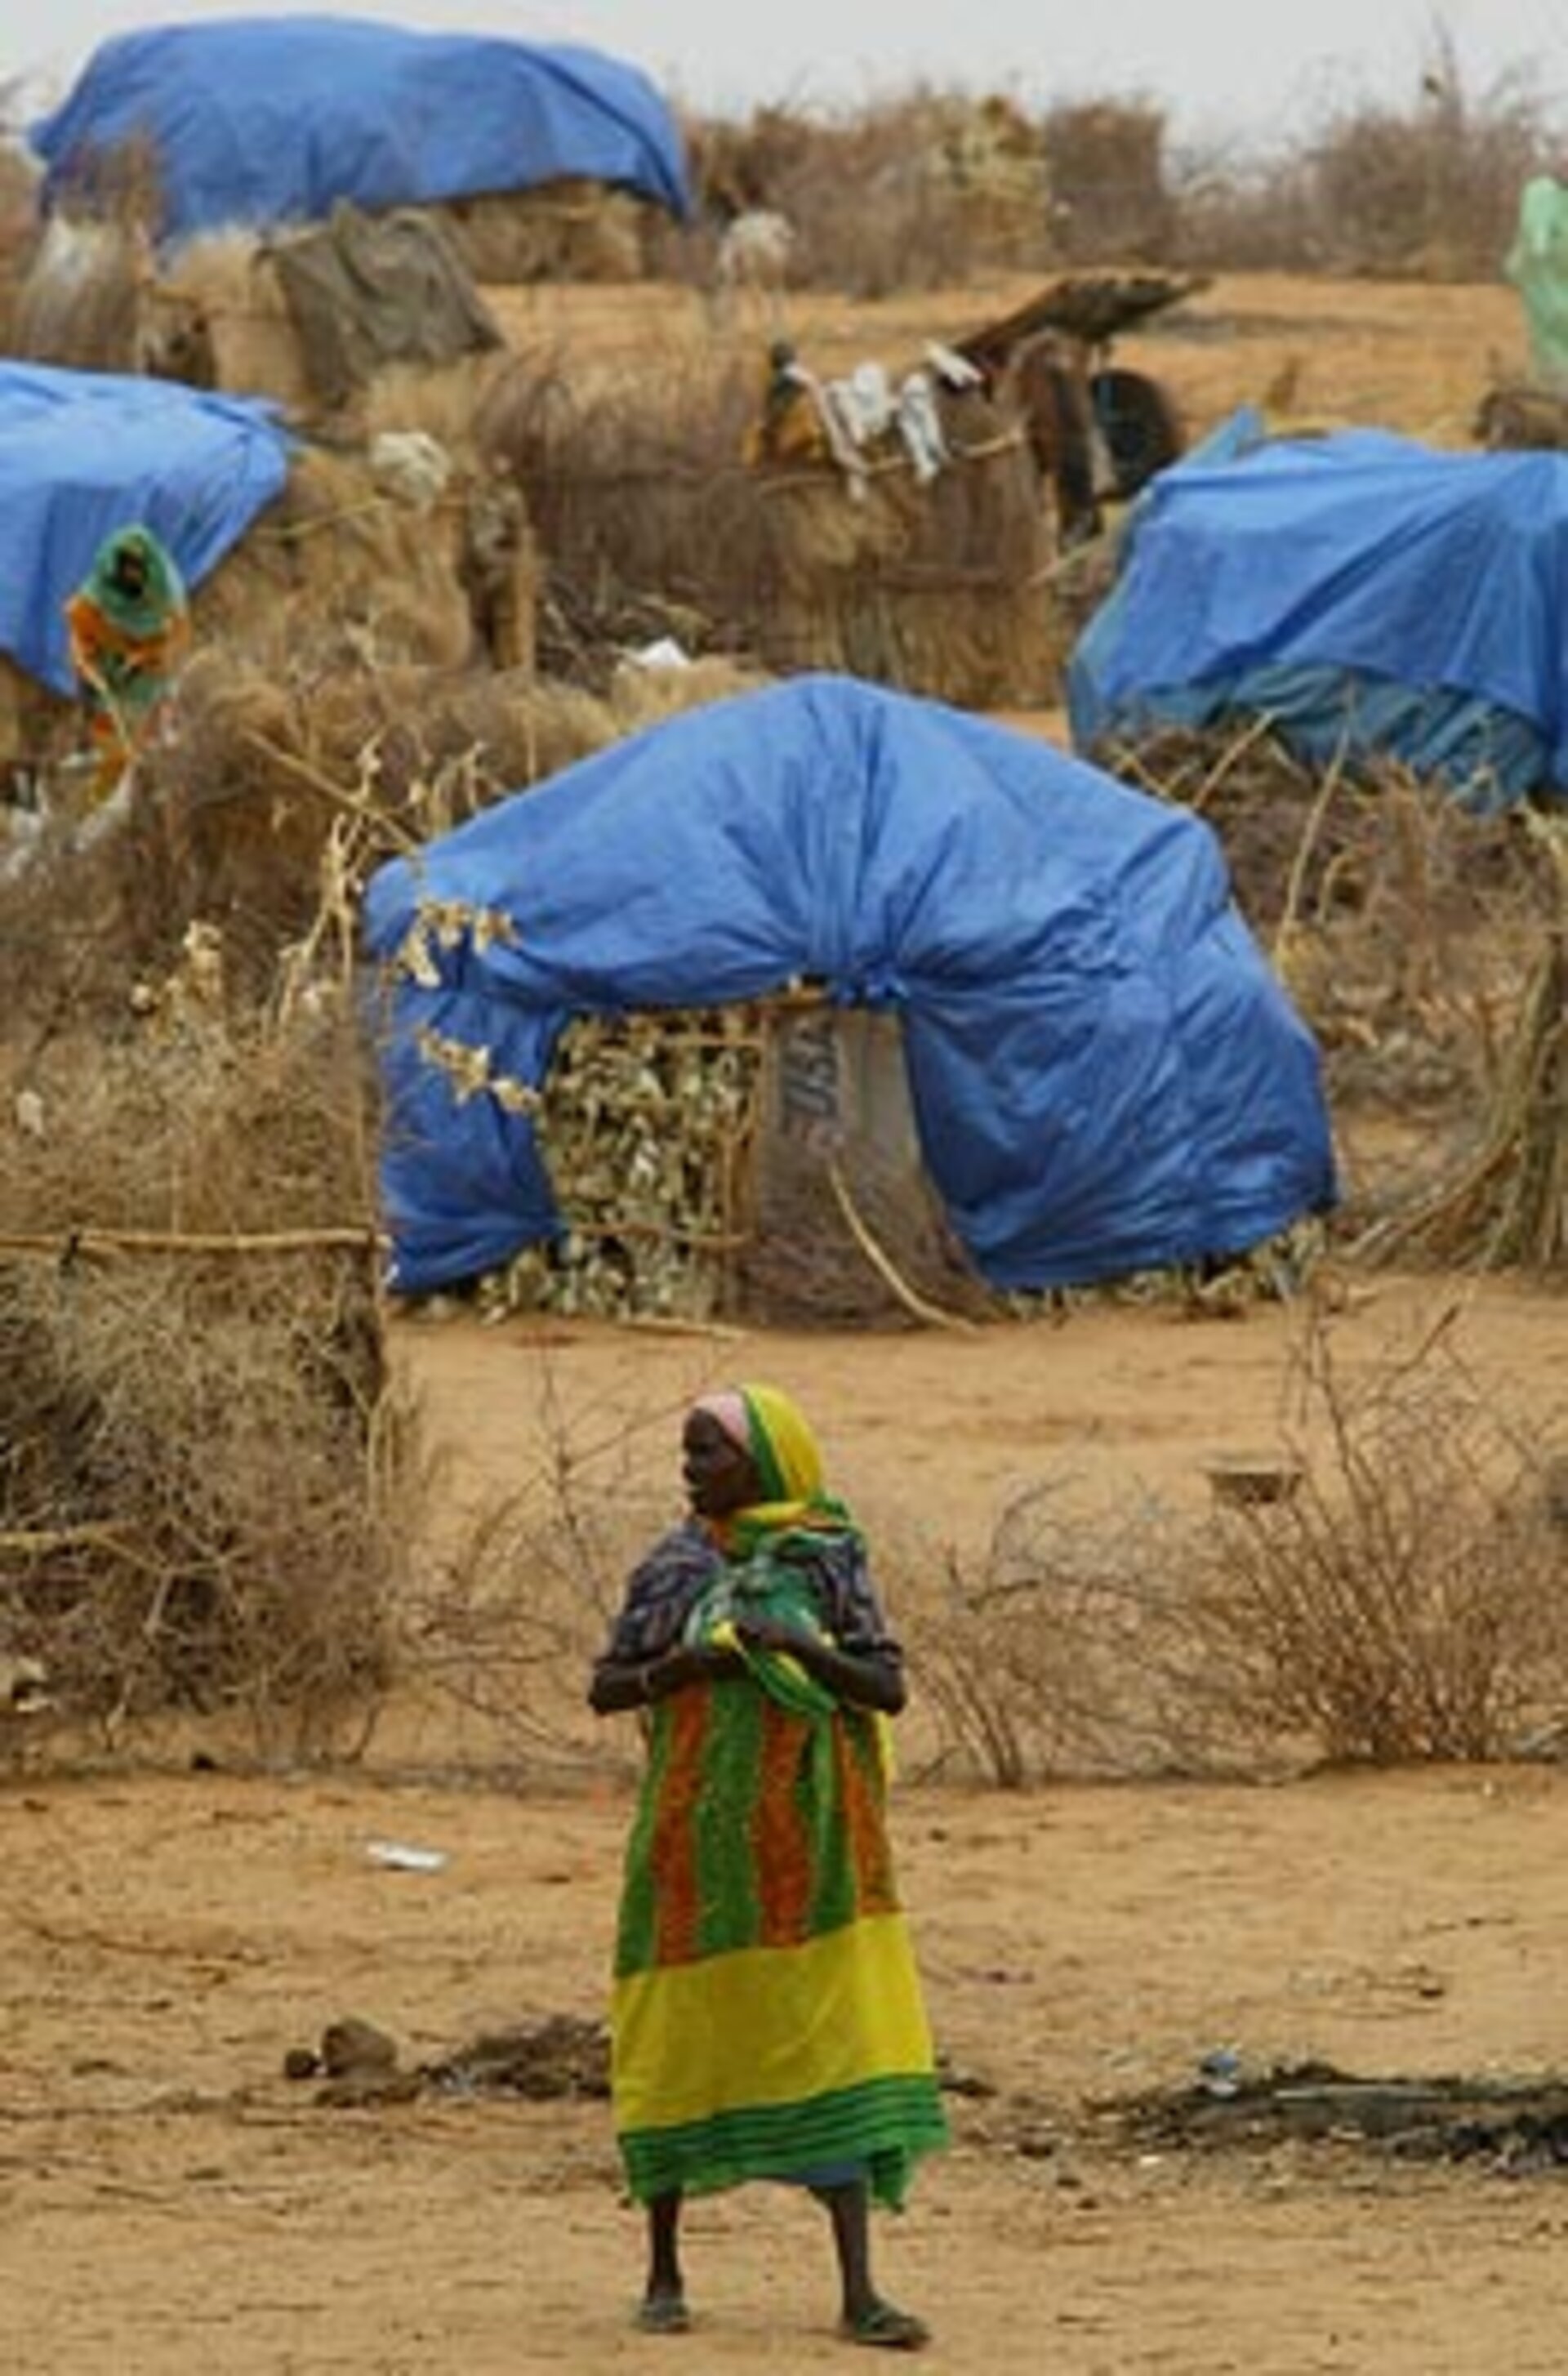 Refugee camp in Darfur